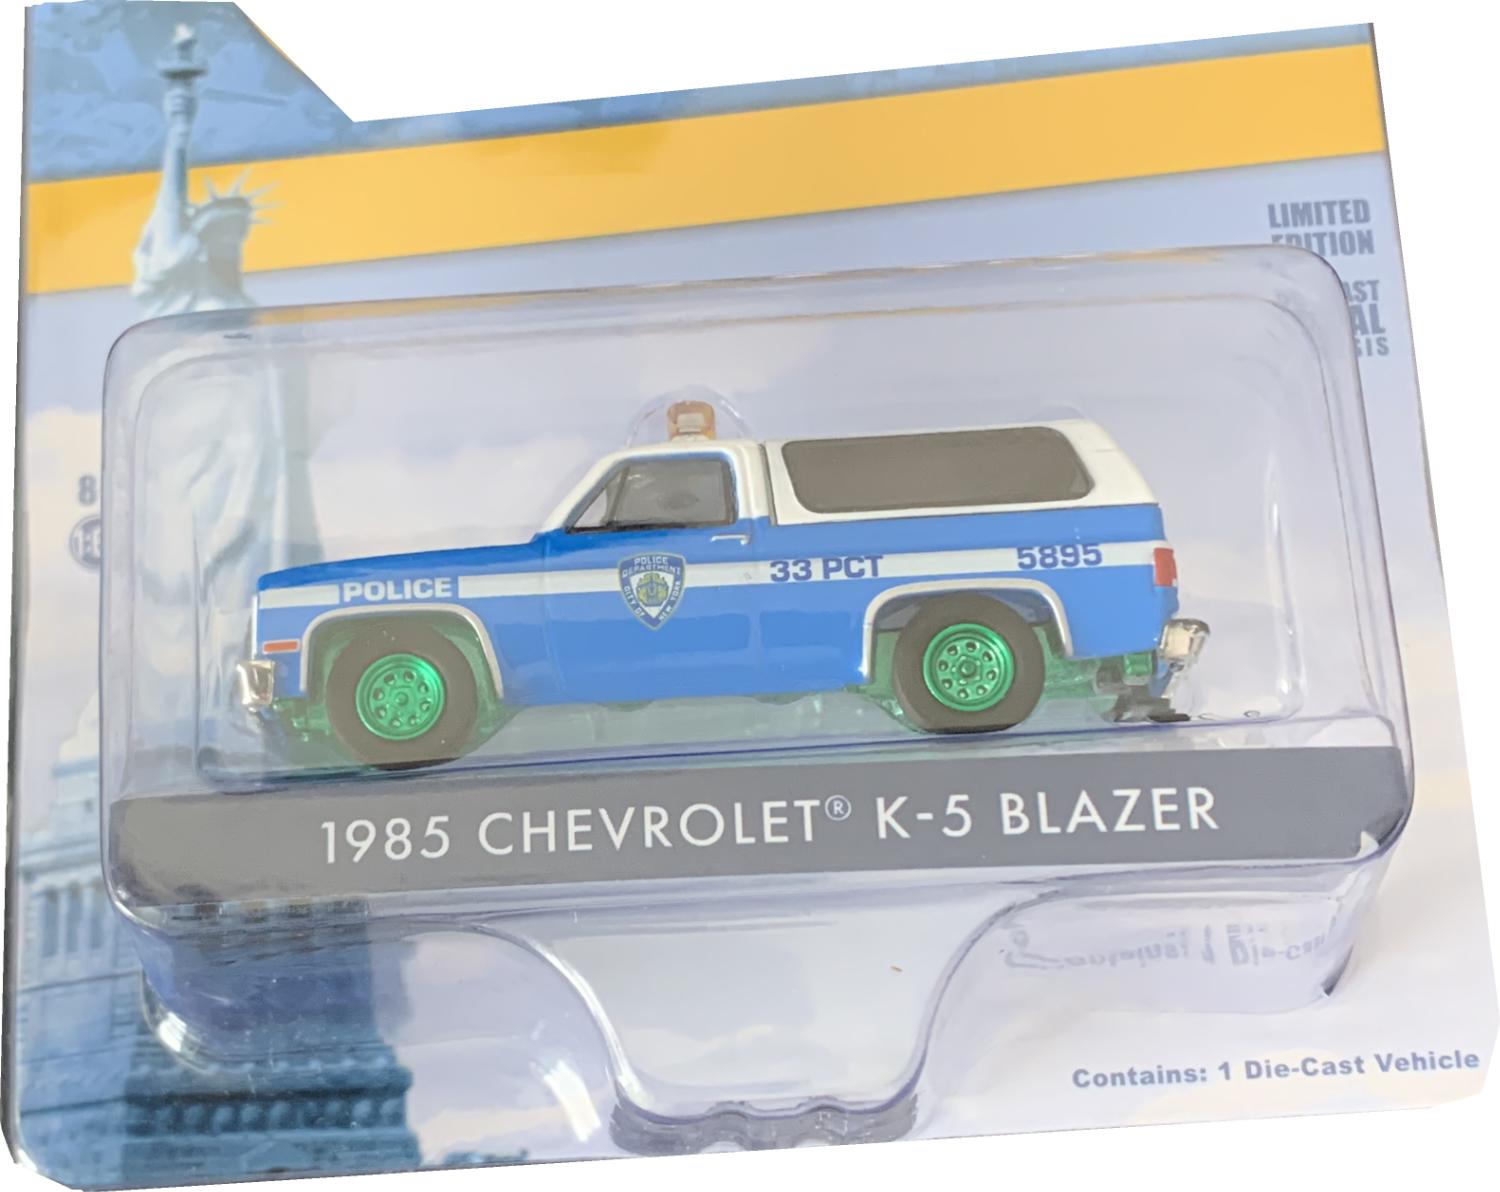 NYPD 1985 Chevrolet K-5 Blazer in blue / white 1:64 scale, Green Wheel version